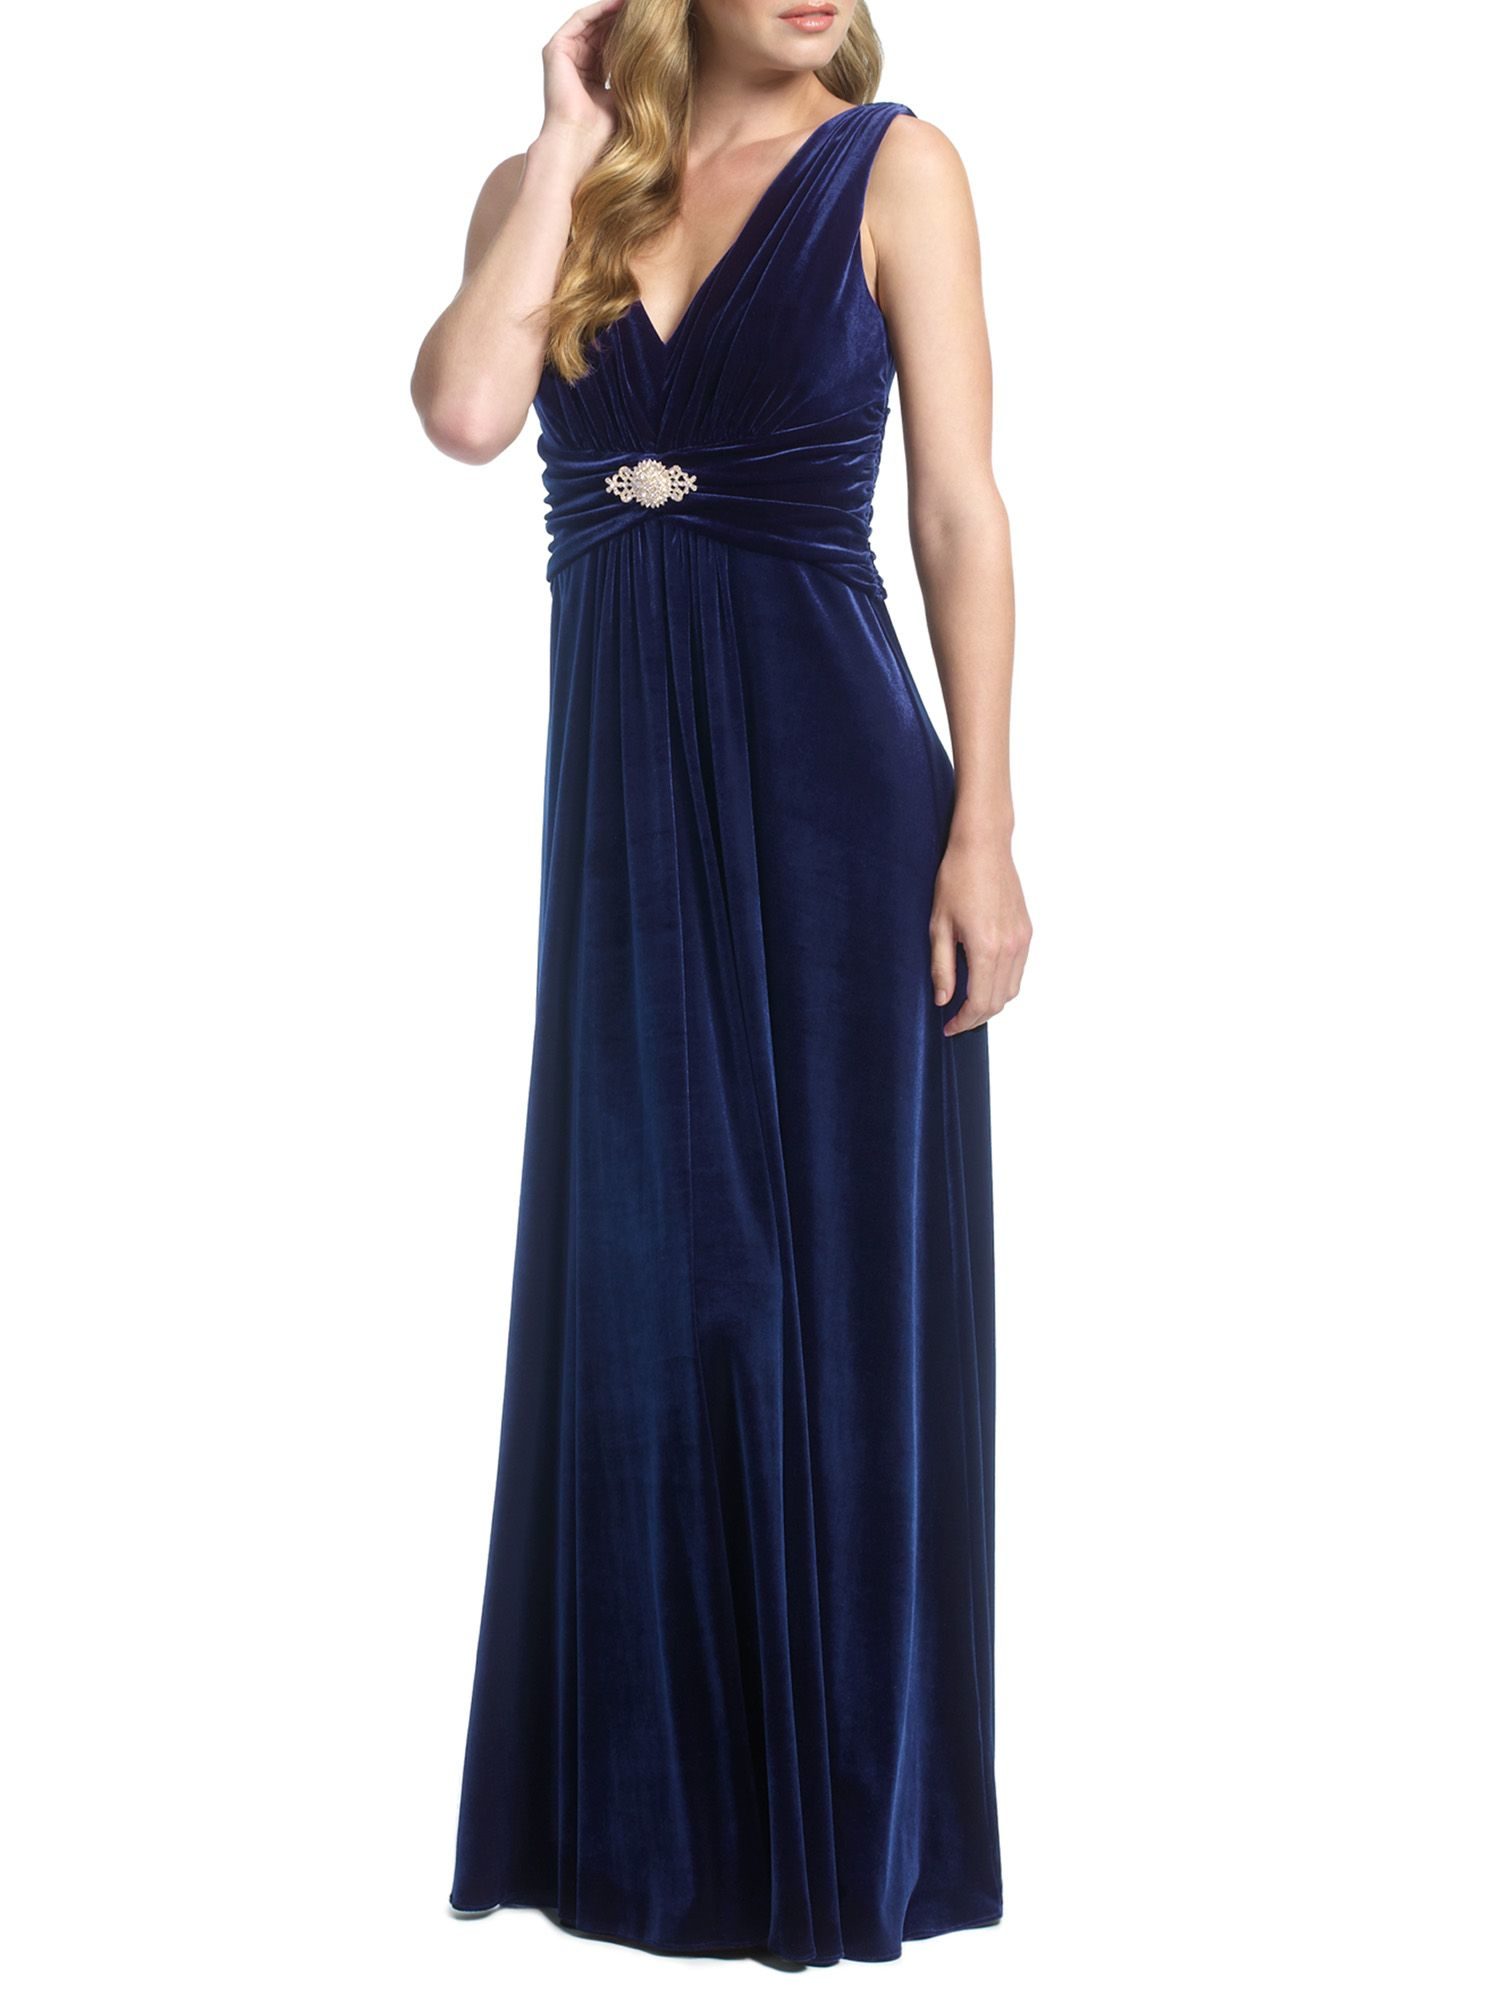 Ariella Milo Velvet Maxi Dress in Navy (Blue) - Lyst